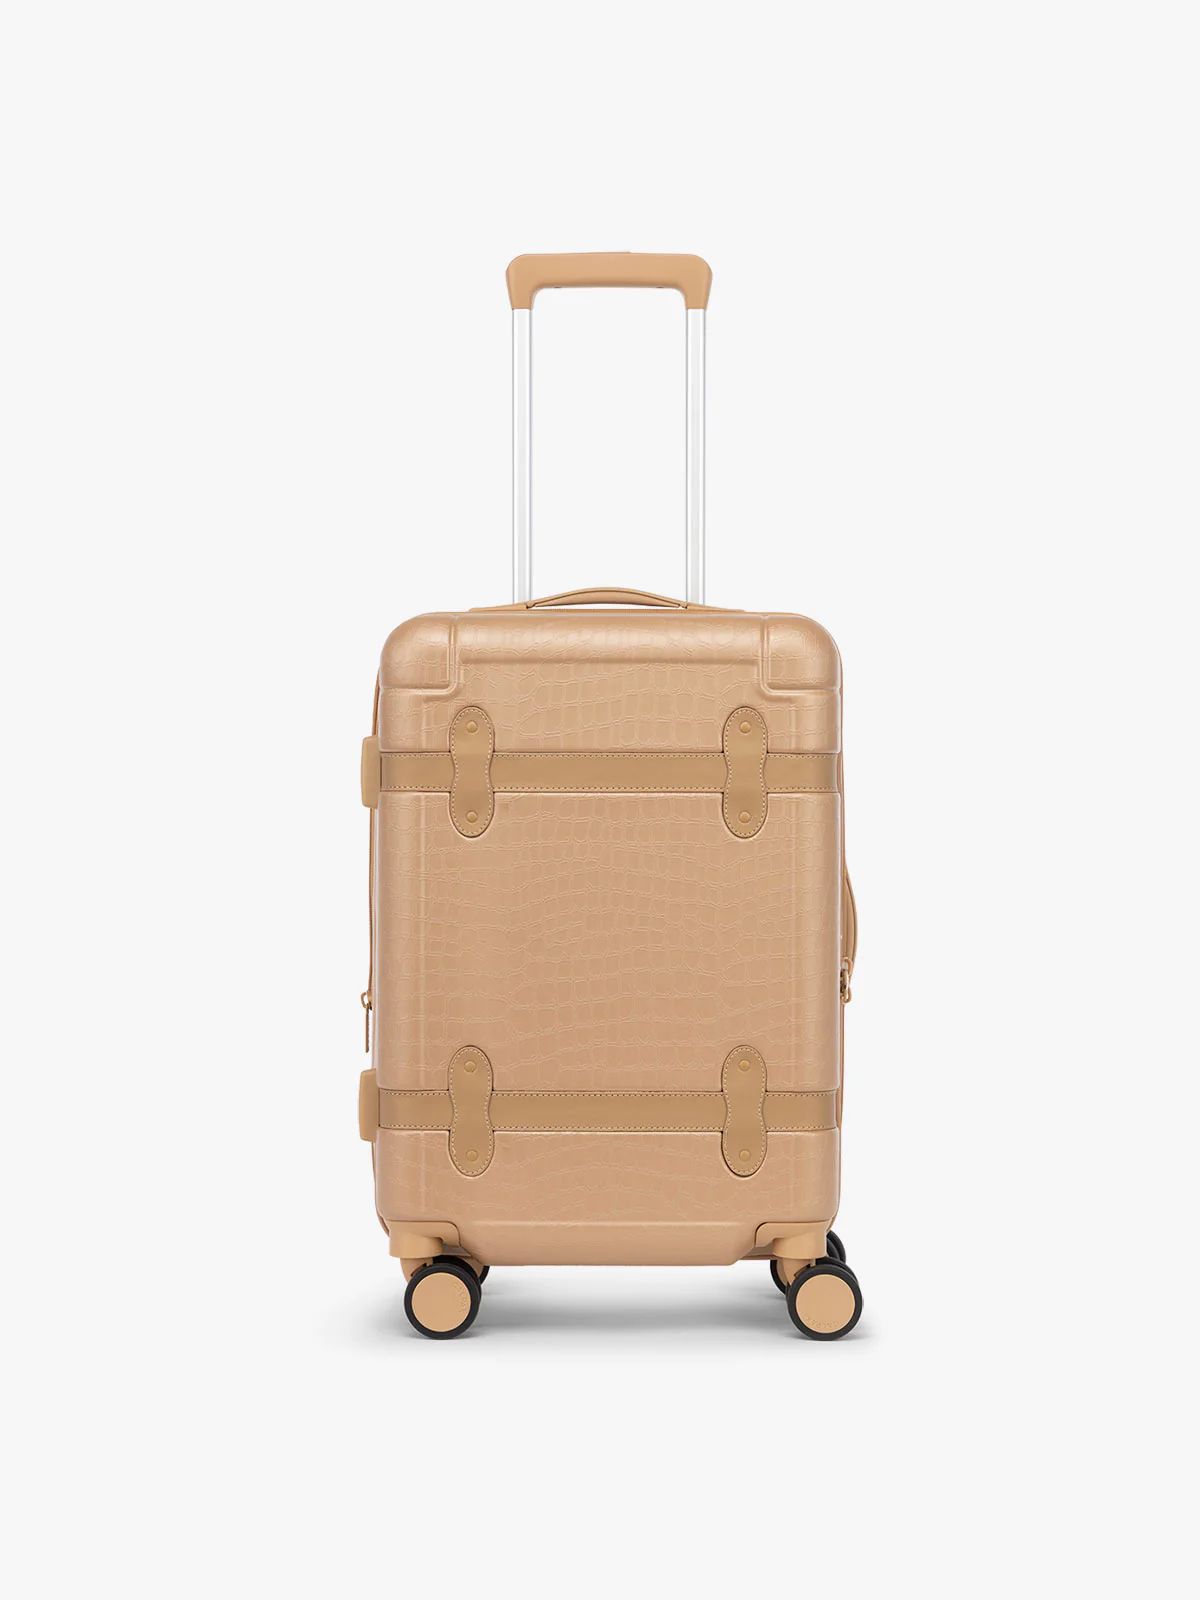 Trnk Carry On Luggage | CALPAK | CALPAK Travel